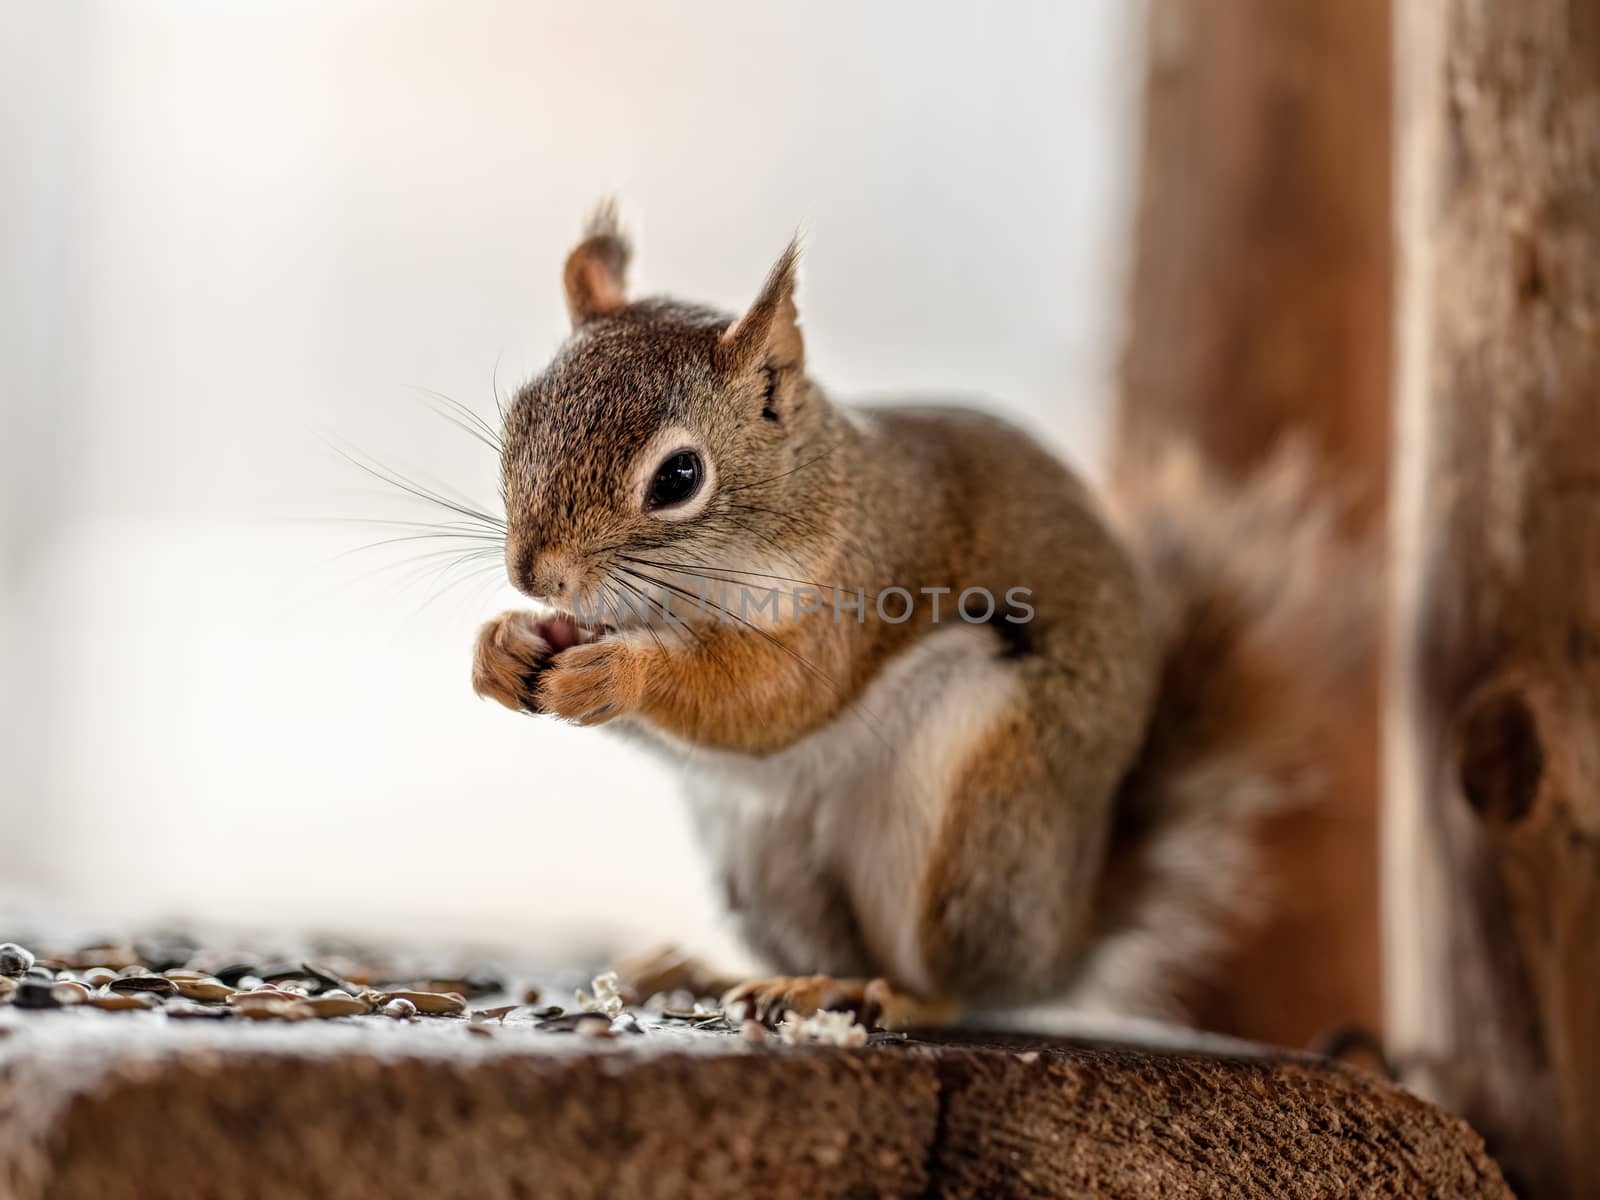 American red squirrel Tamiasciurus hudsonicus eating seeds, closeup detail by Ivanko